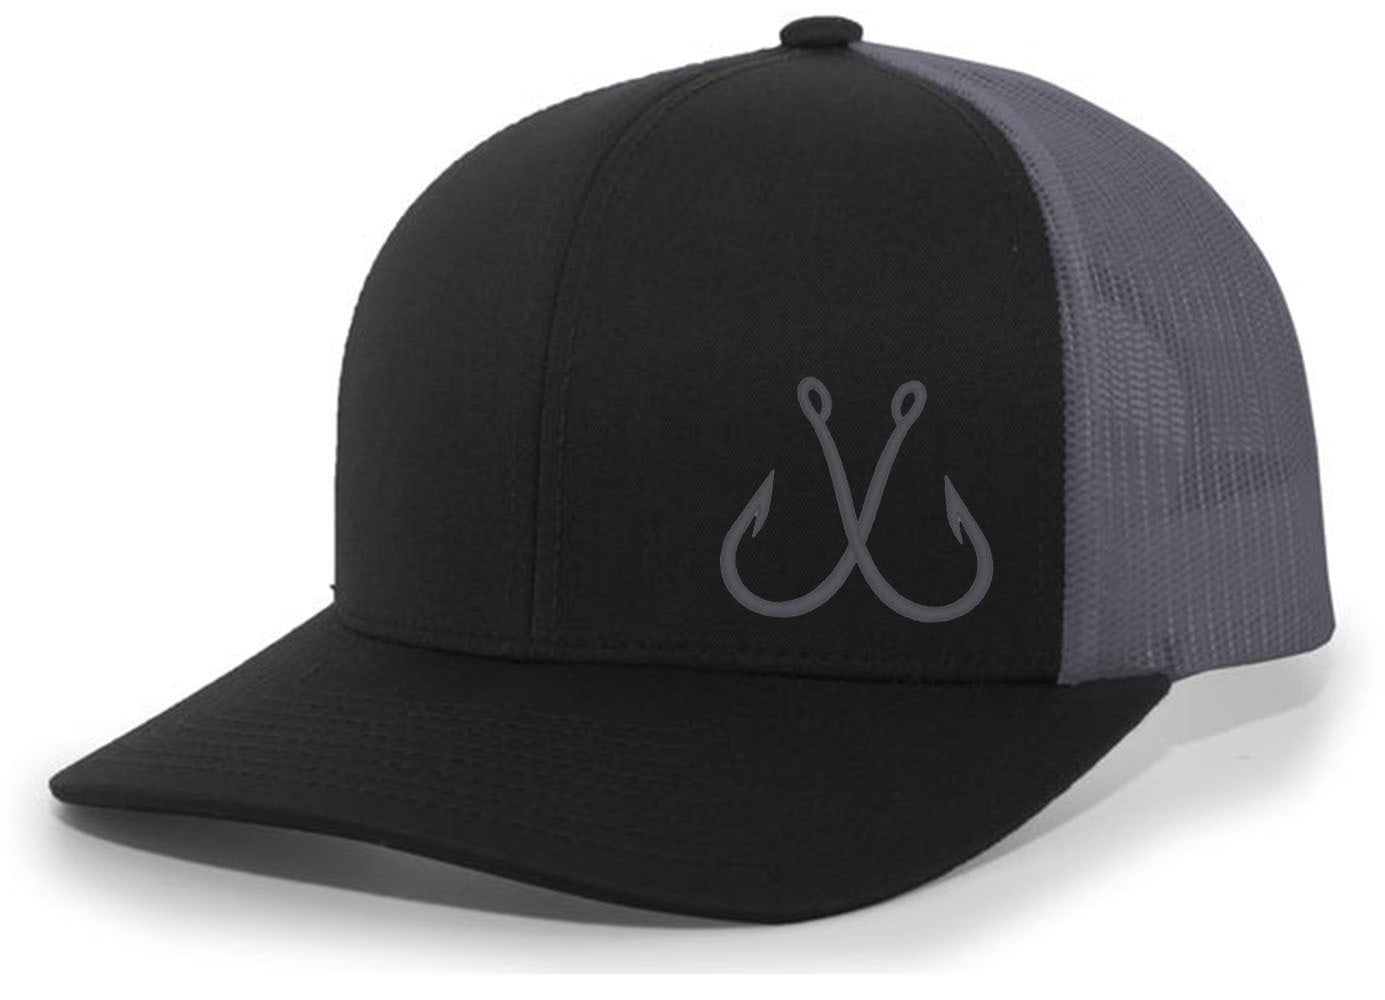 John Deere Men's Logo Contrast Mesh Back Core Baseball Cap : : Mode